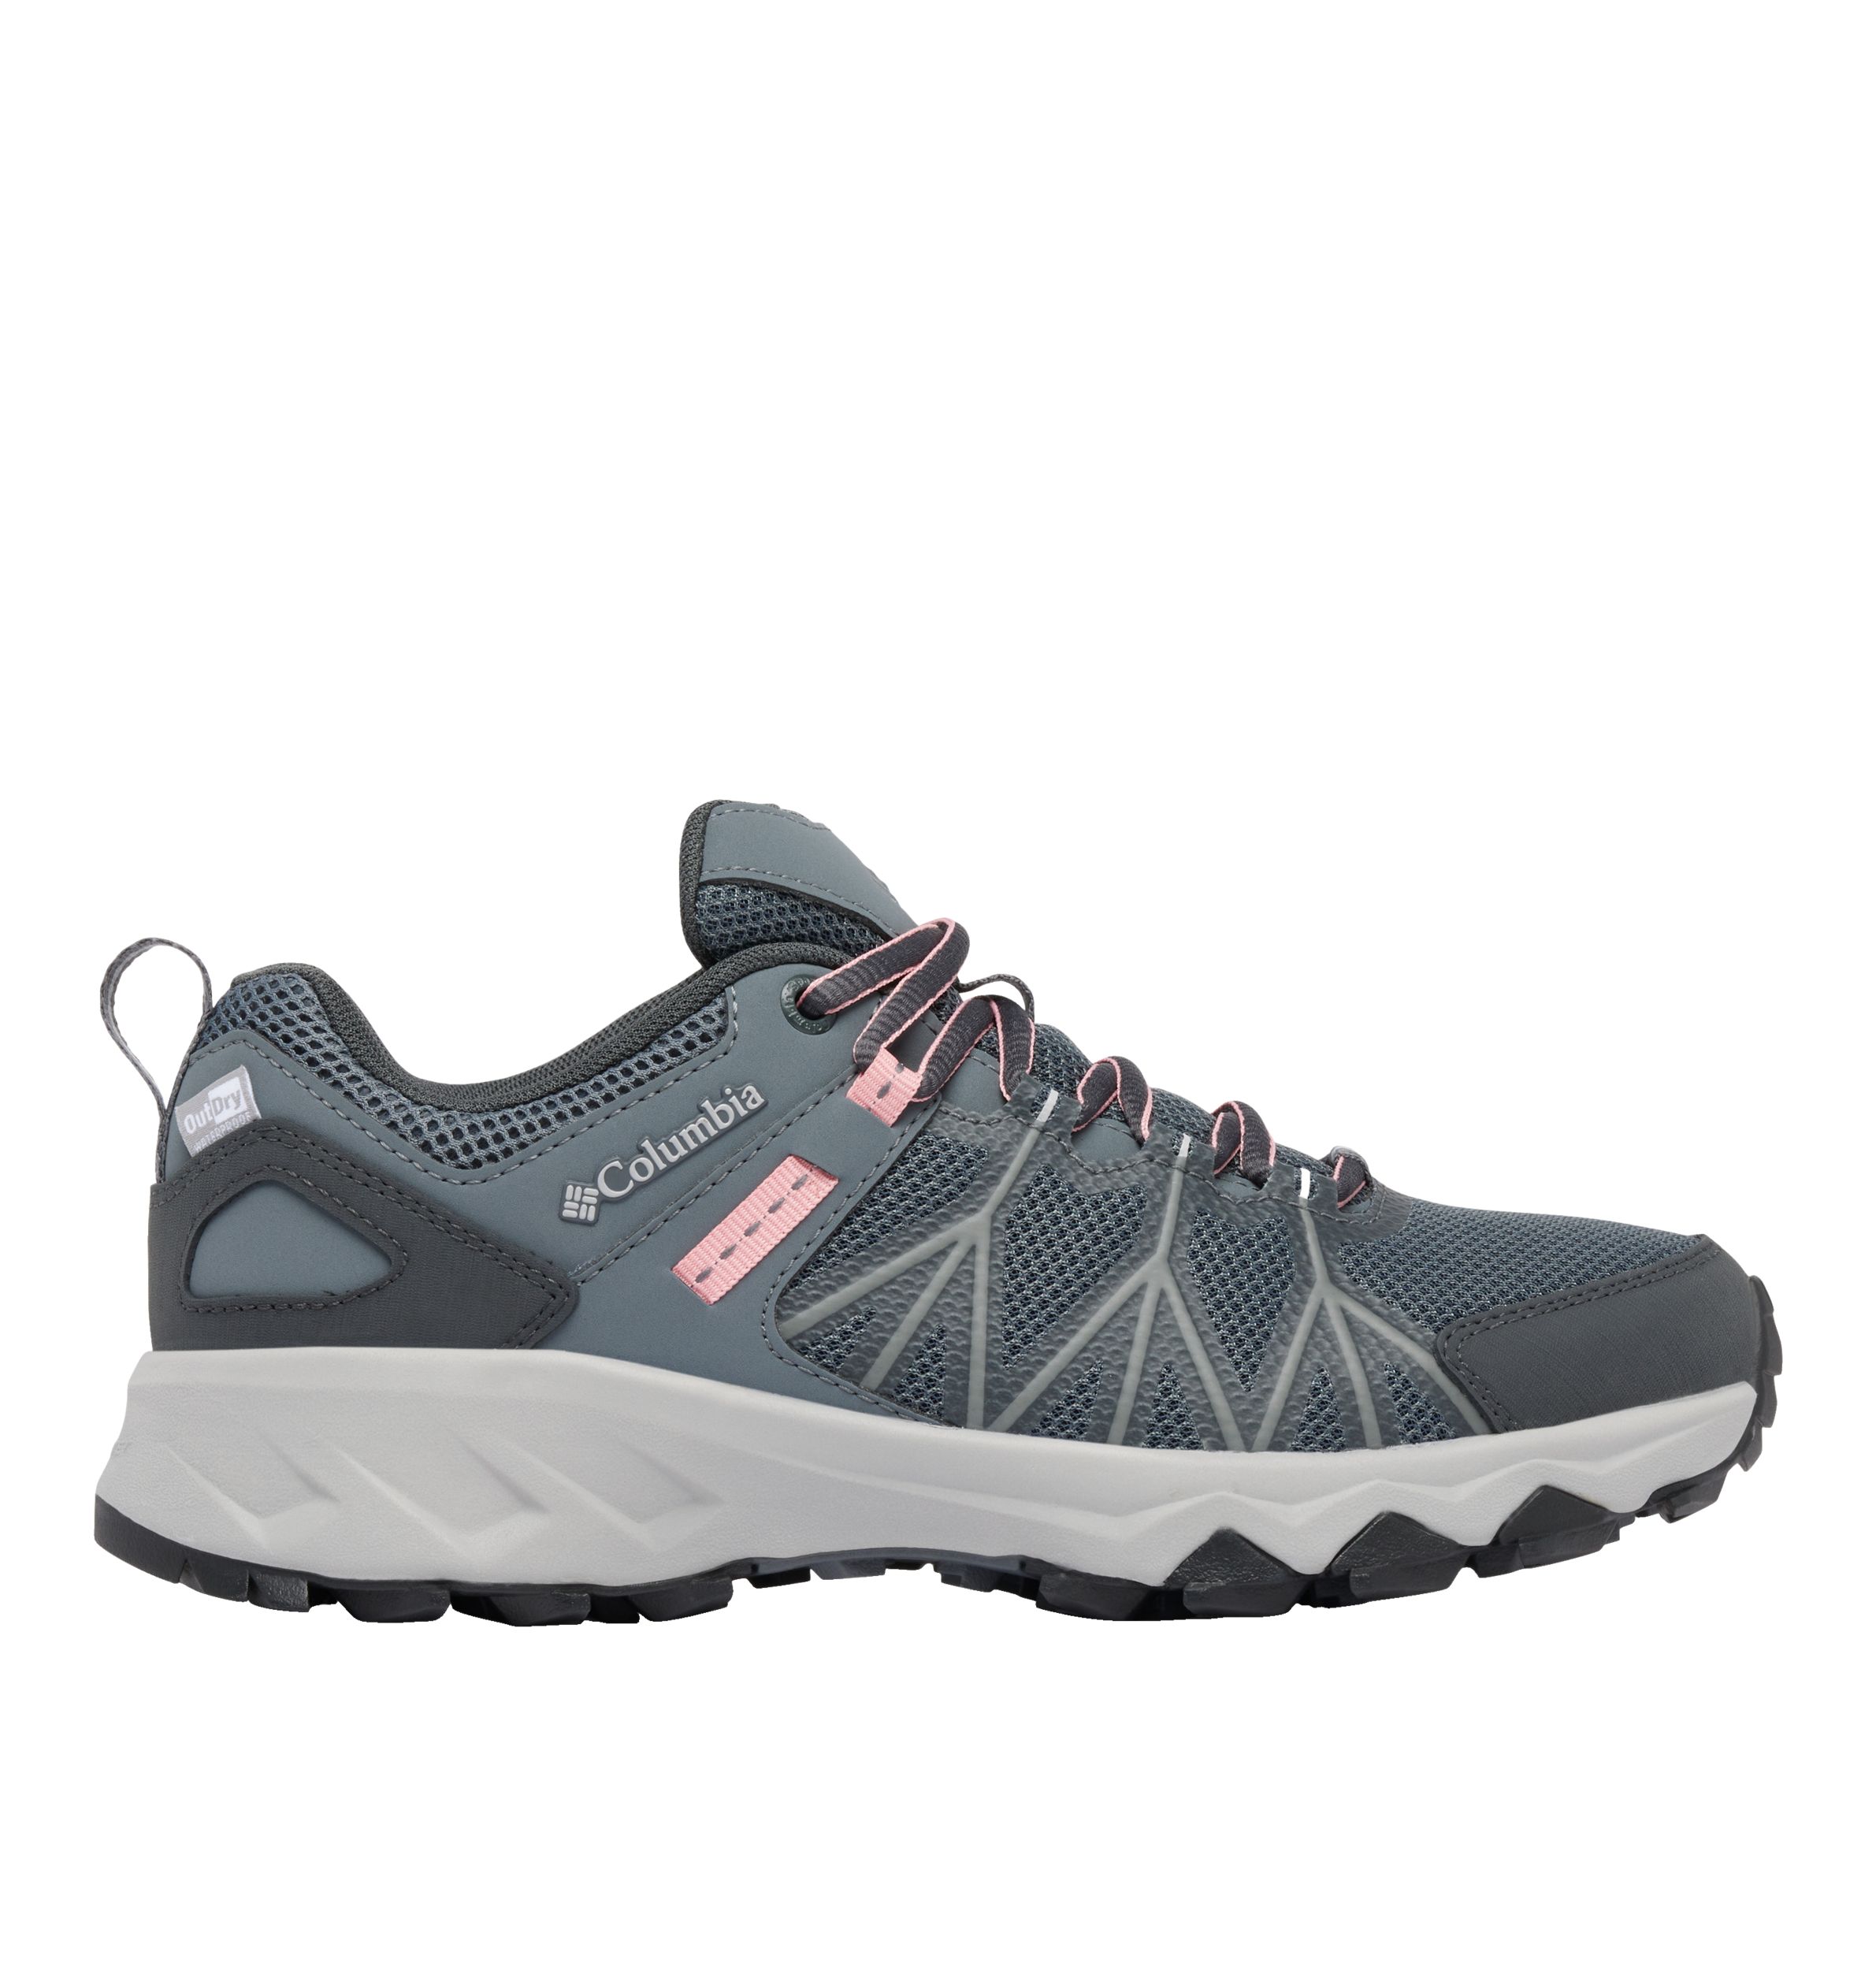 Image of Columbia Women's Peakfreak II OutDry Hiking Shoes